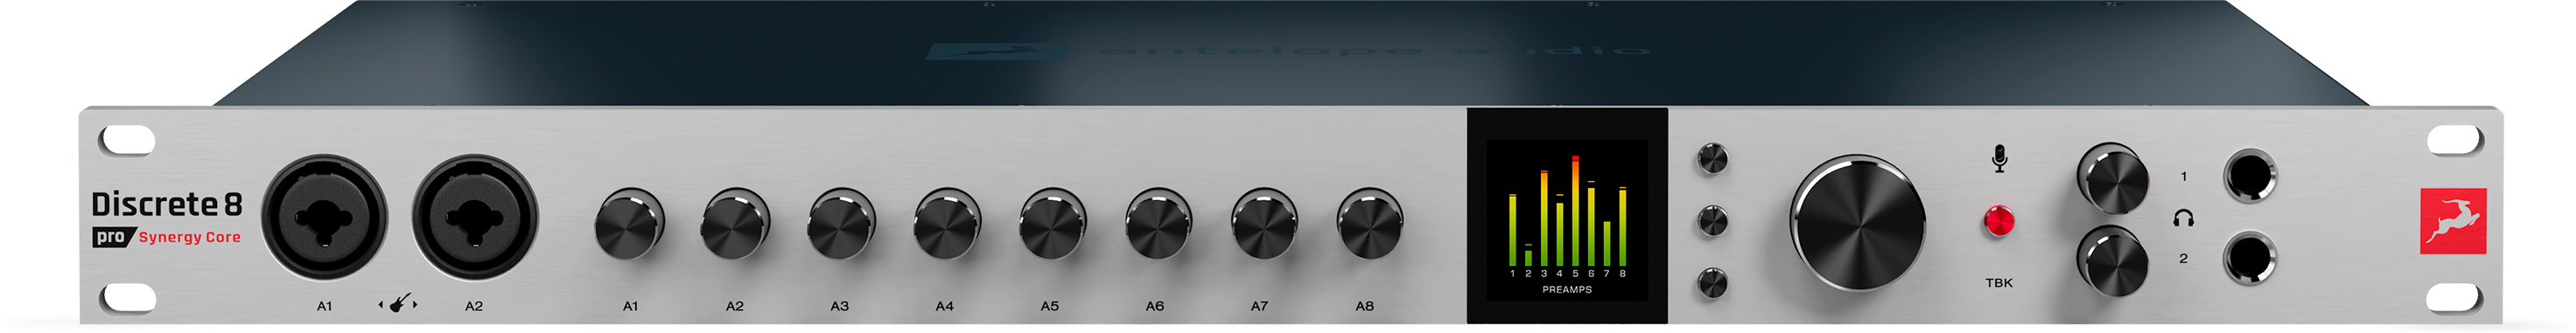 Antelope Audio Discrete 8 Pro Synergy Core - Thunderbolt audio interface - Main picture